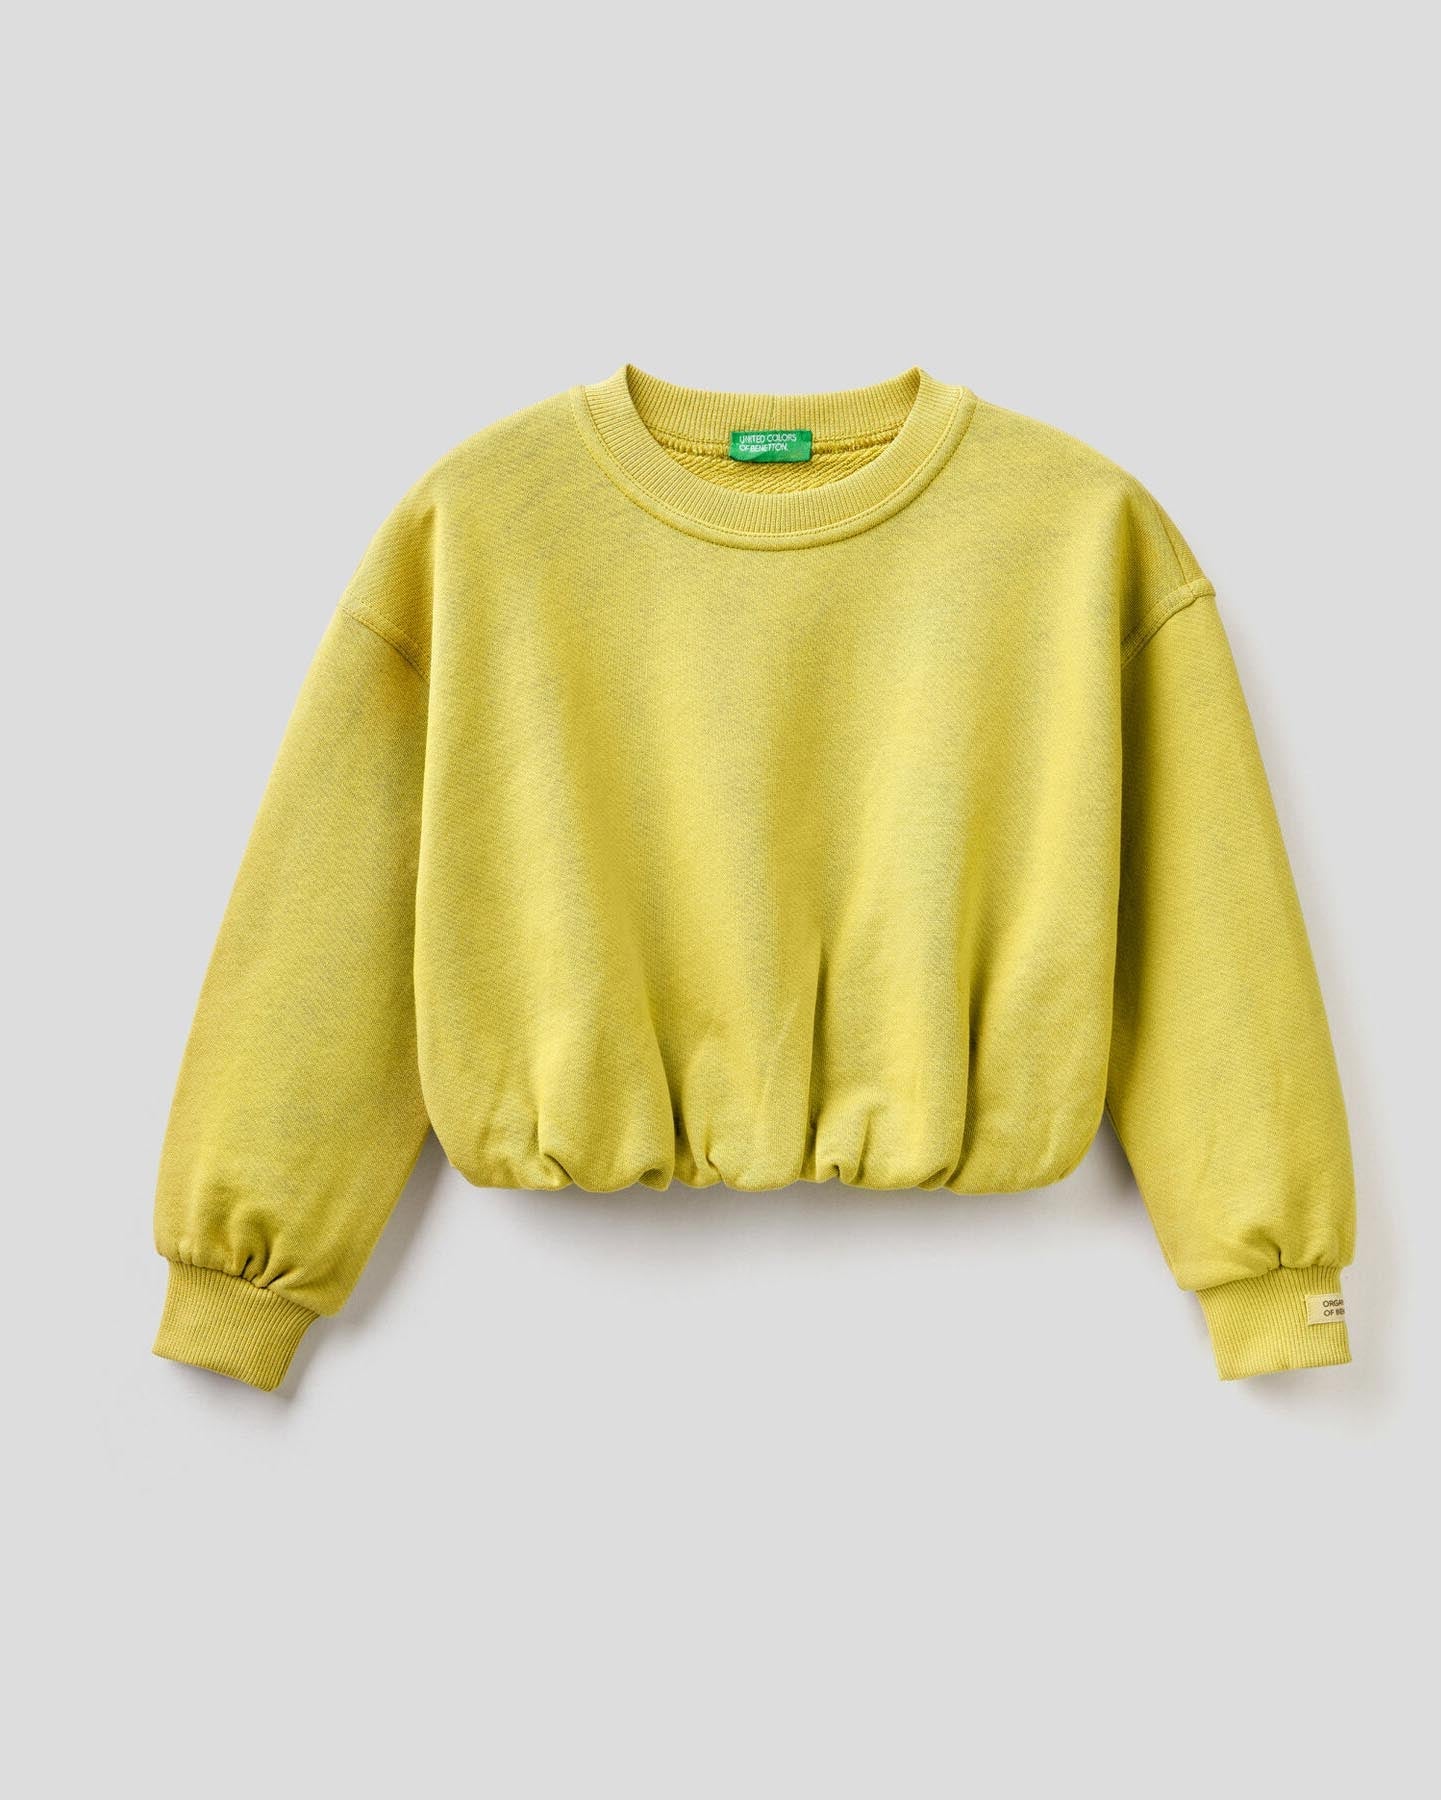 Yellow Sweater L/S